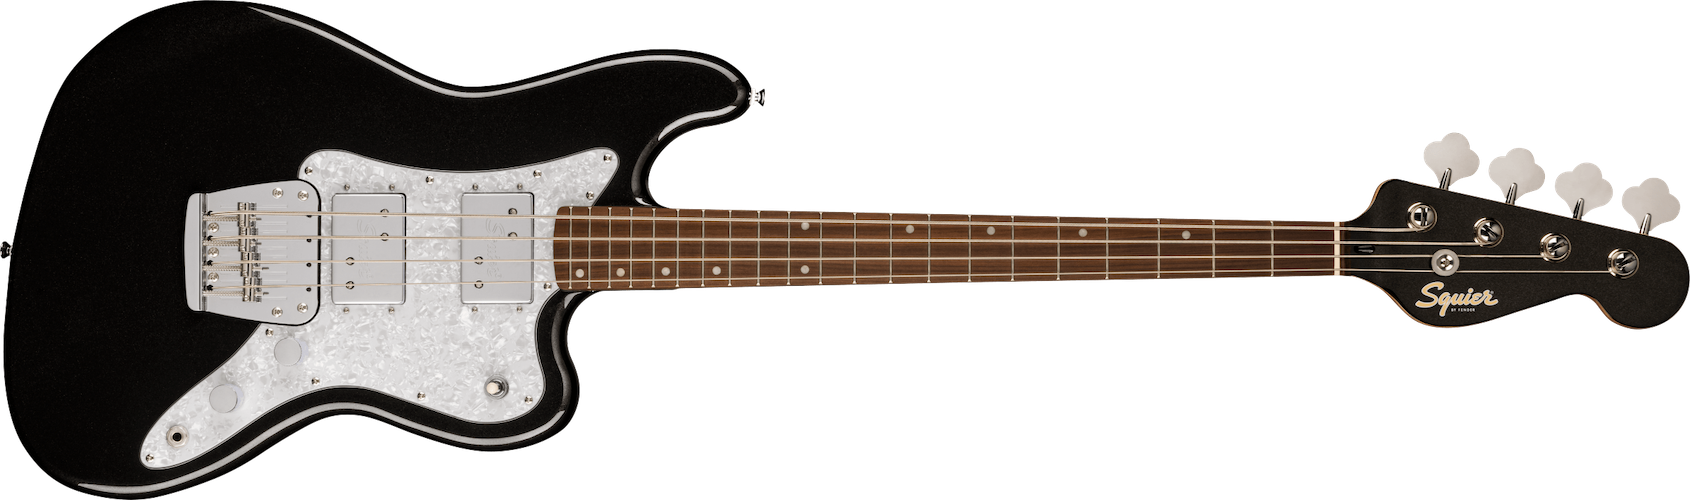 Fender Paranormal Rascal Bass HH, White Pearloid Pickguard, Metallic Black